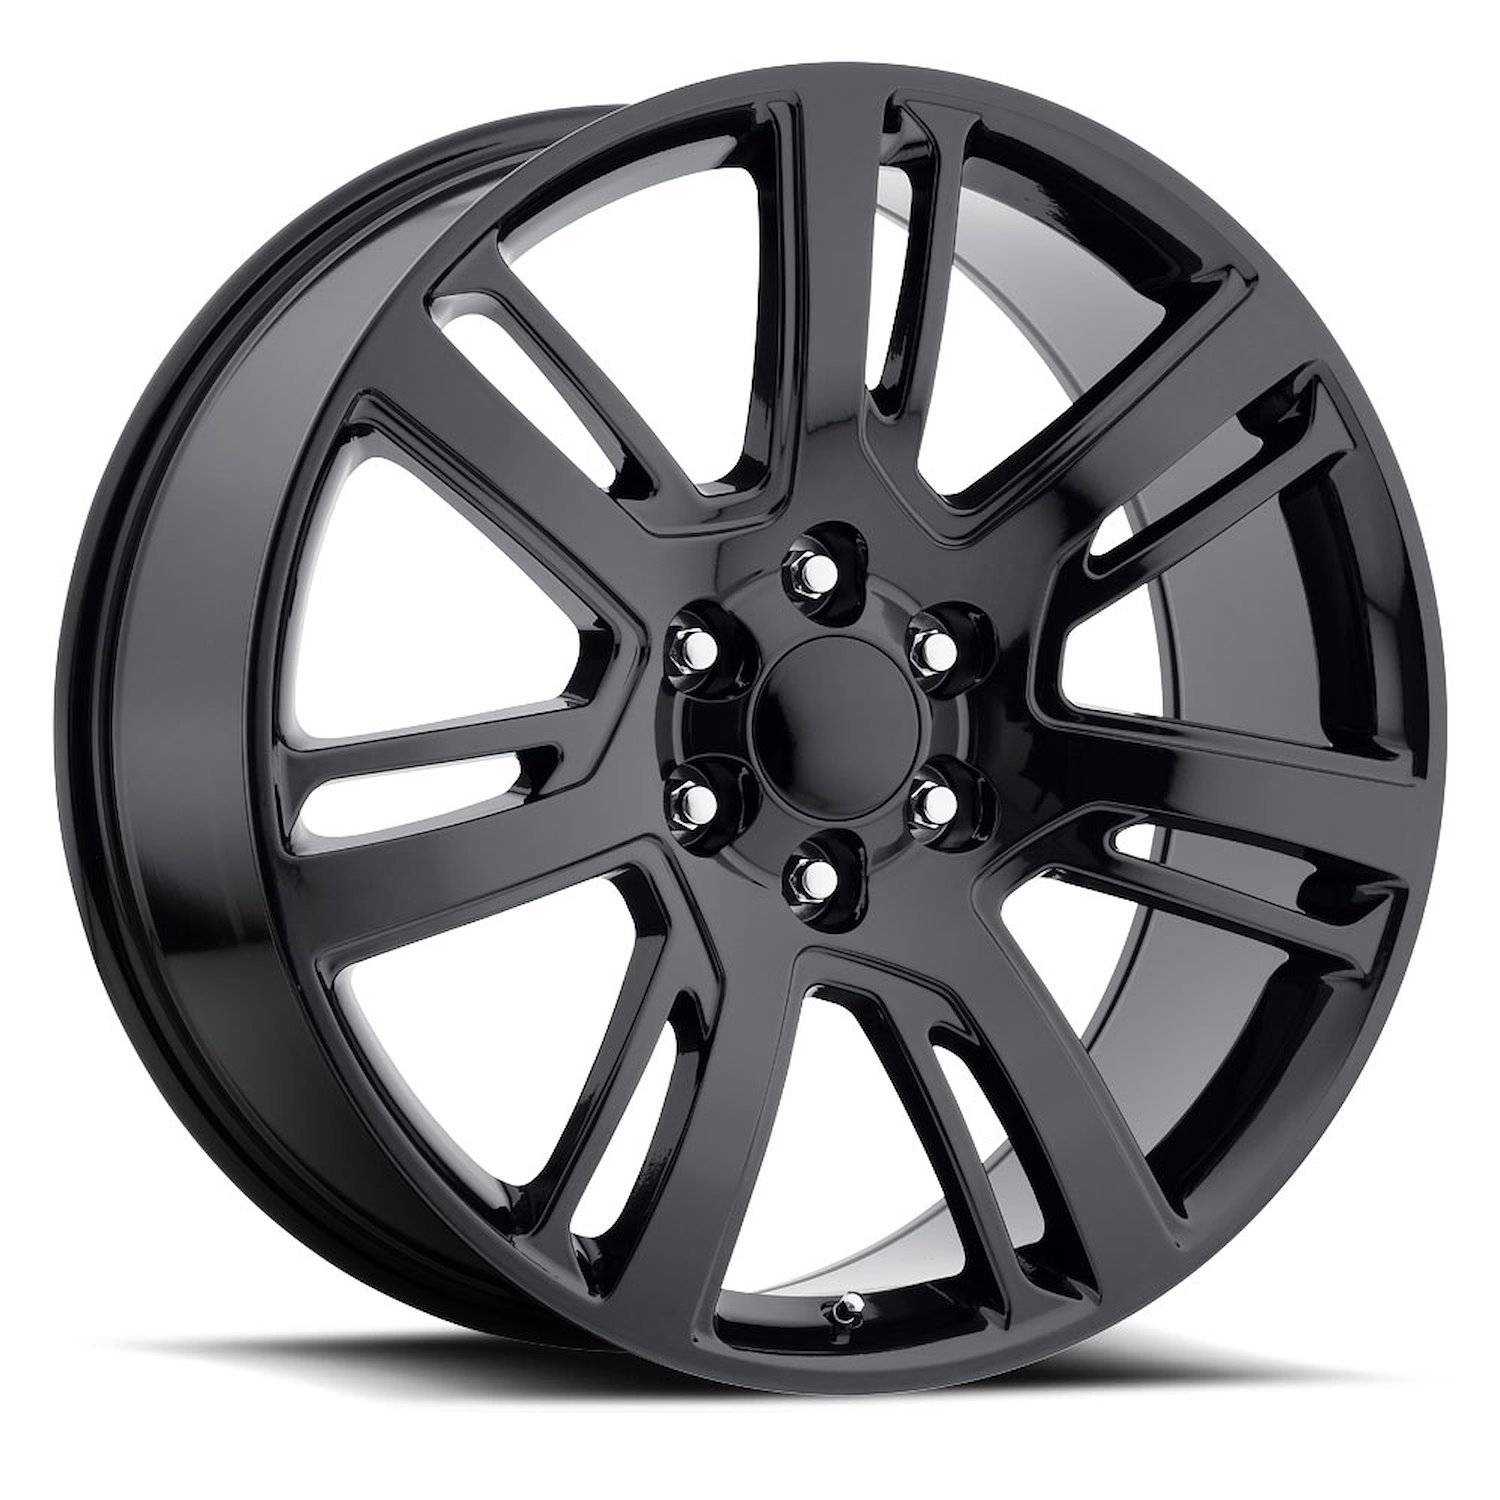 Replica ESV 229-6139-31 GB Escalade Platinum Wheel [Size: 22" x 9"] Finish: Gloss Black